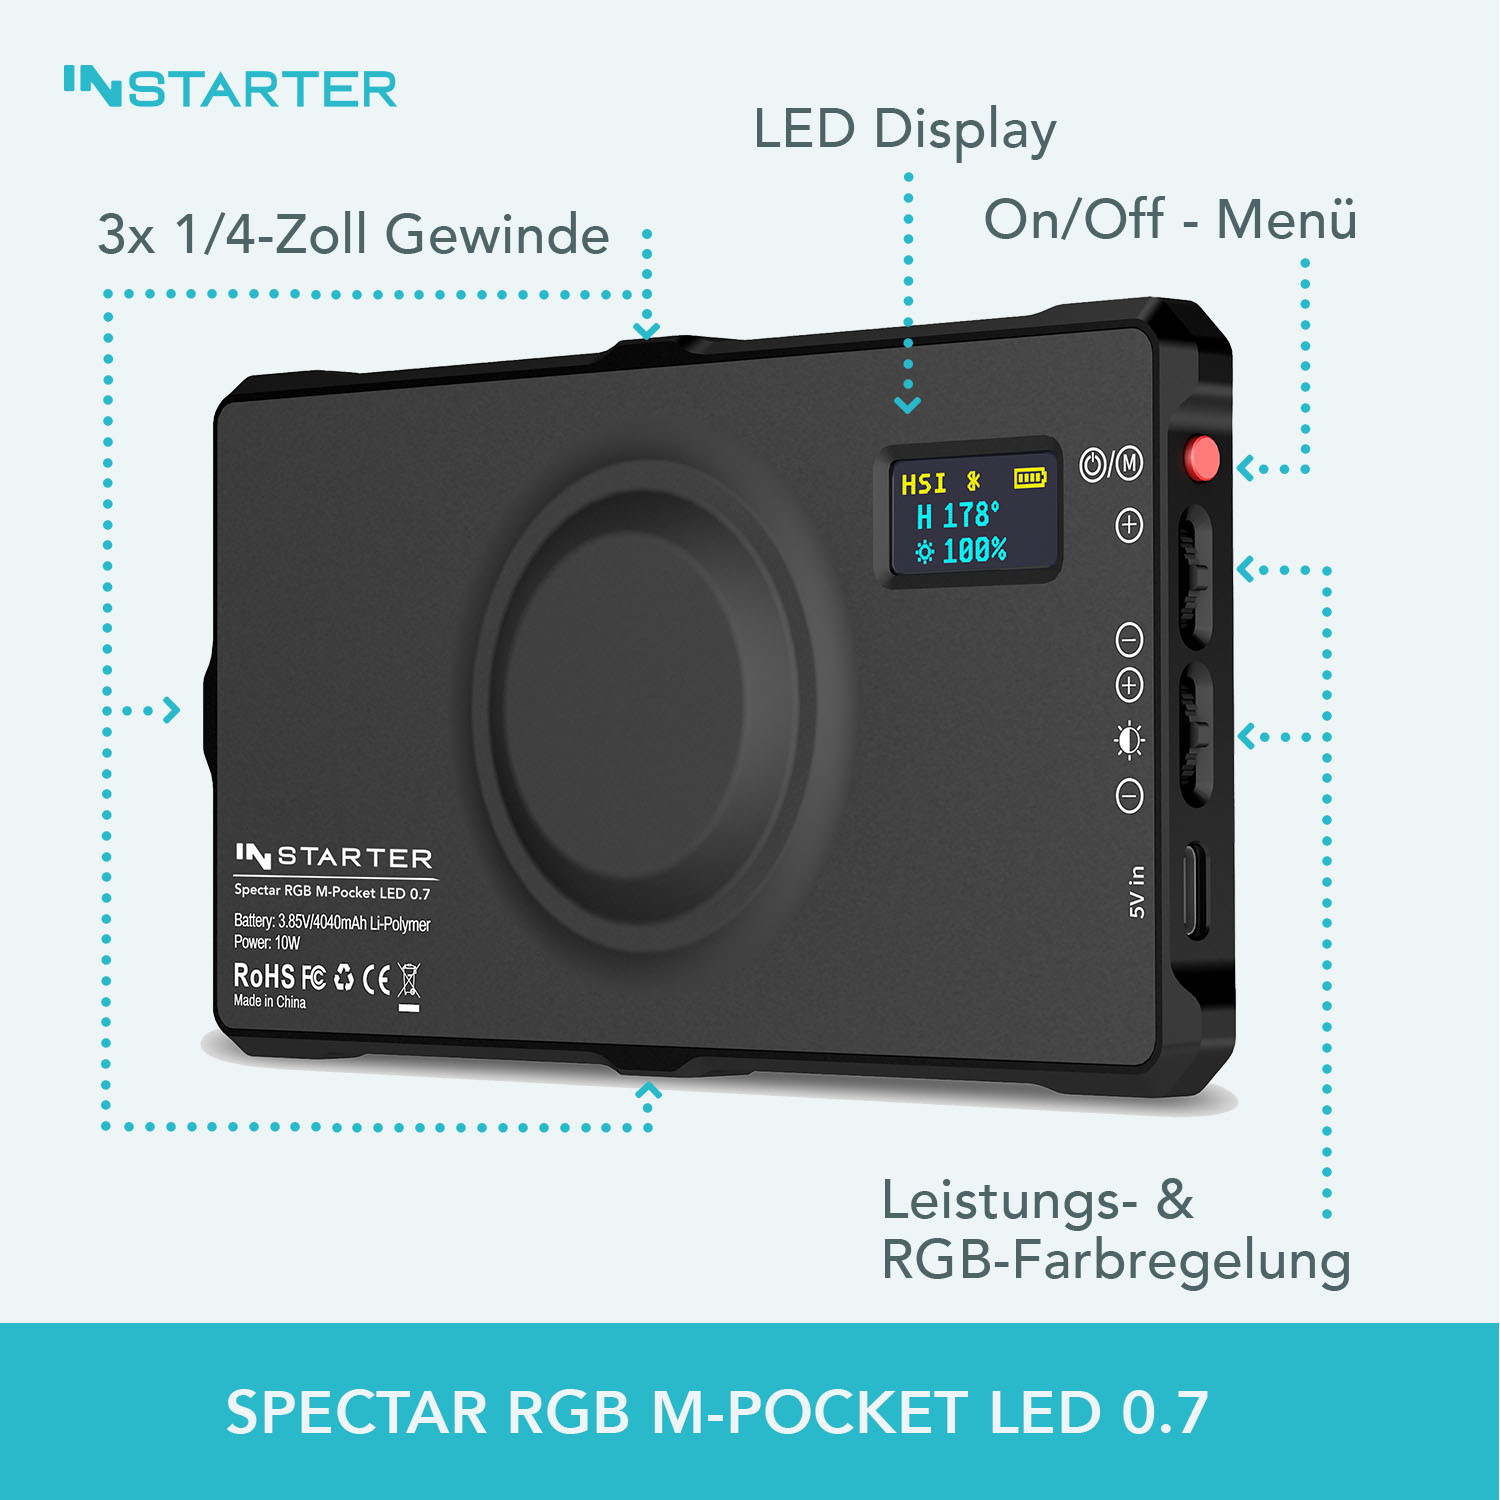 INStarter Spectar RGB M-Pocket LED 0.7 Rückseite